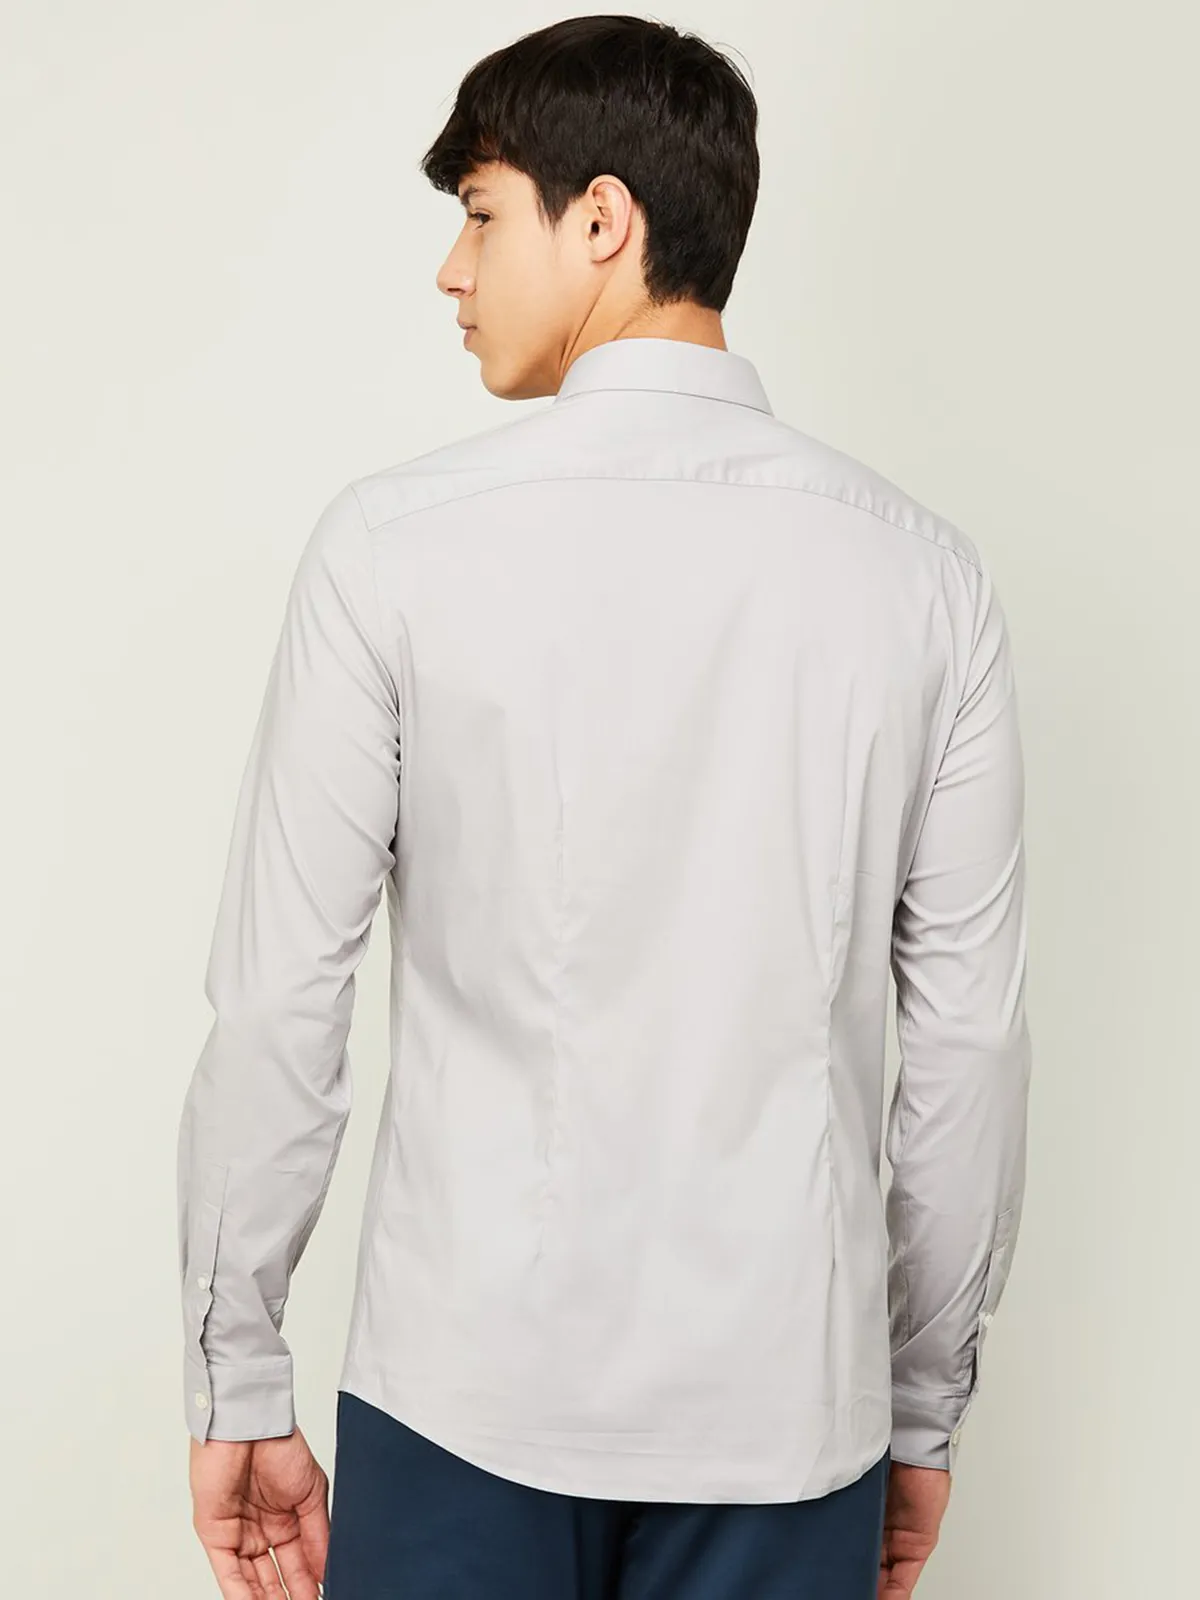 Celio plain light grey cotton shirt